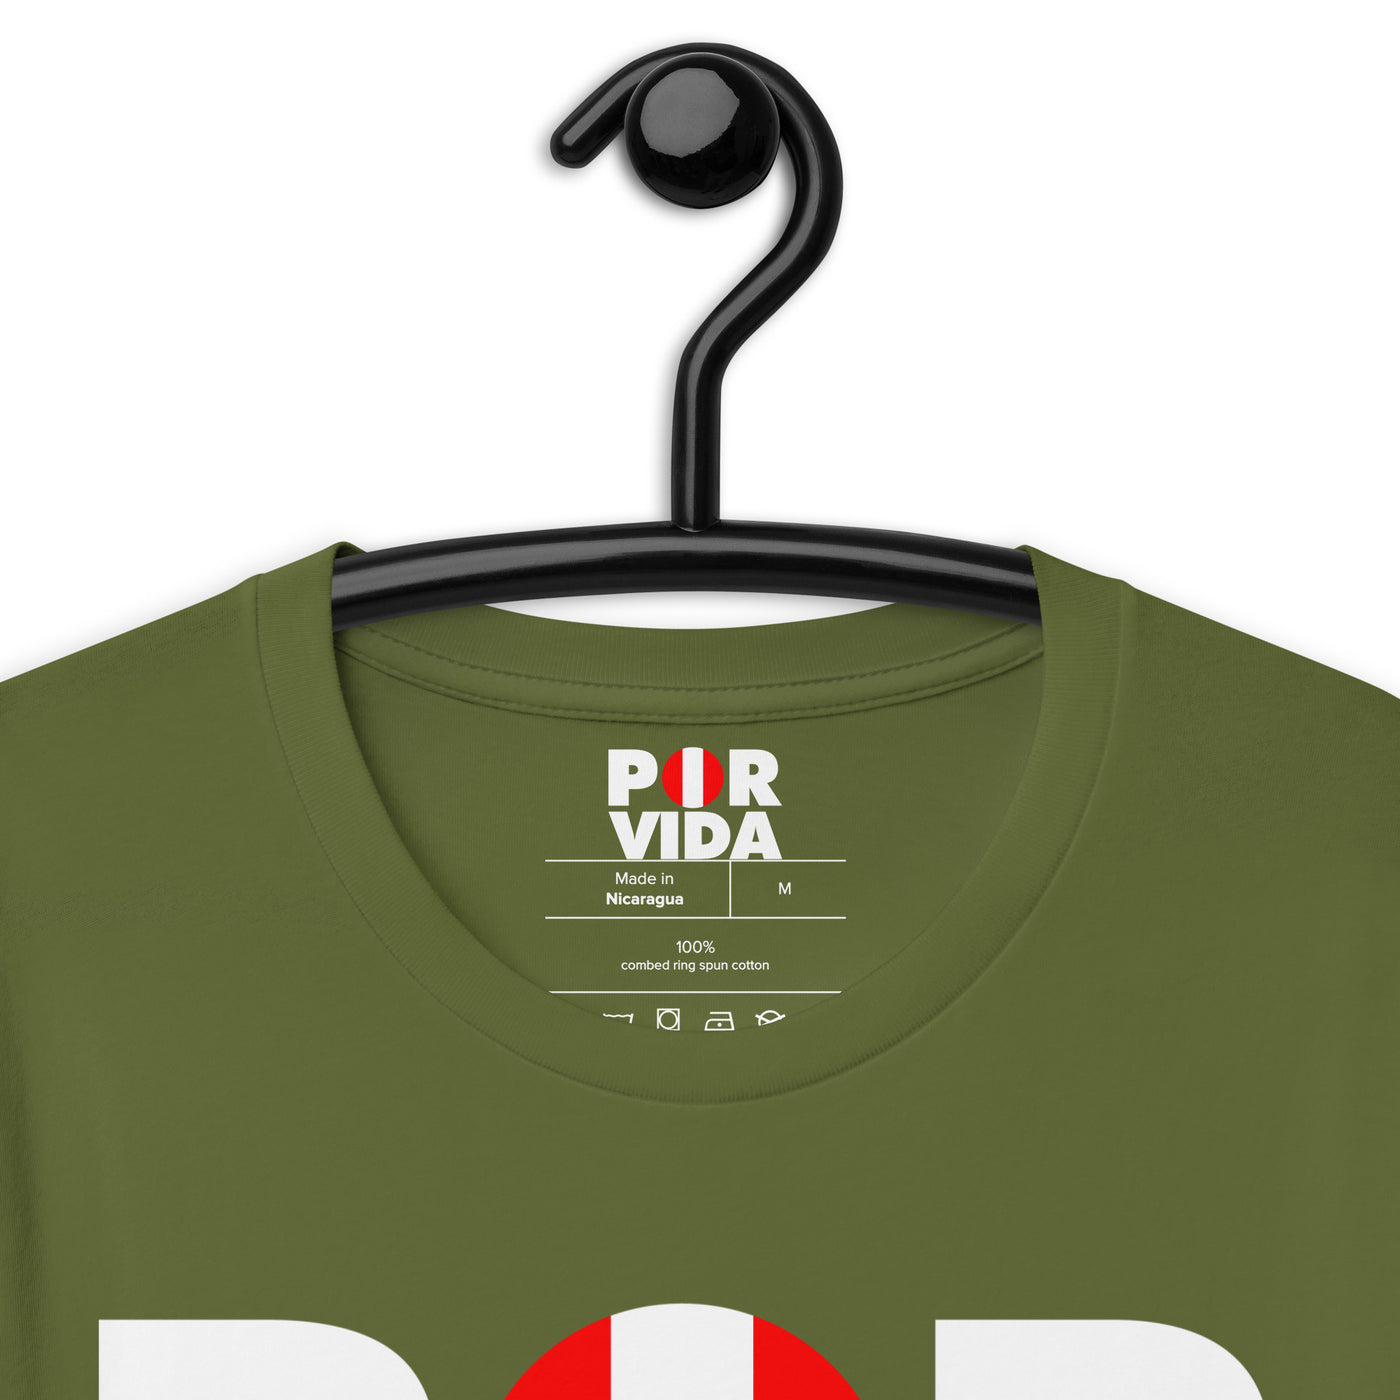 Peru POR VIDA (White Text) Unisex t-shirt